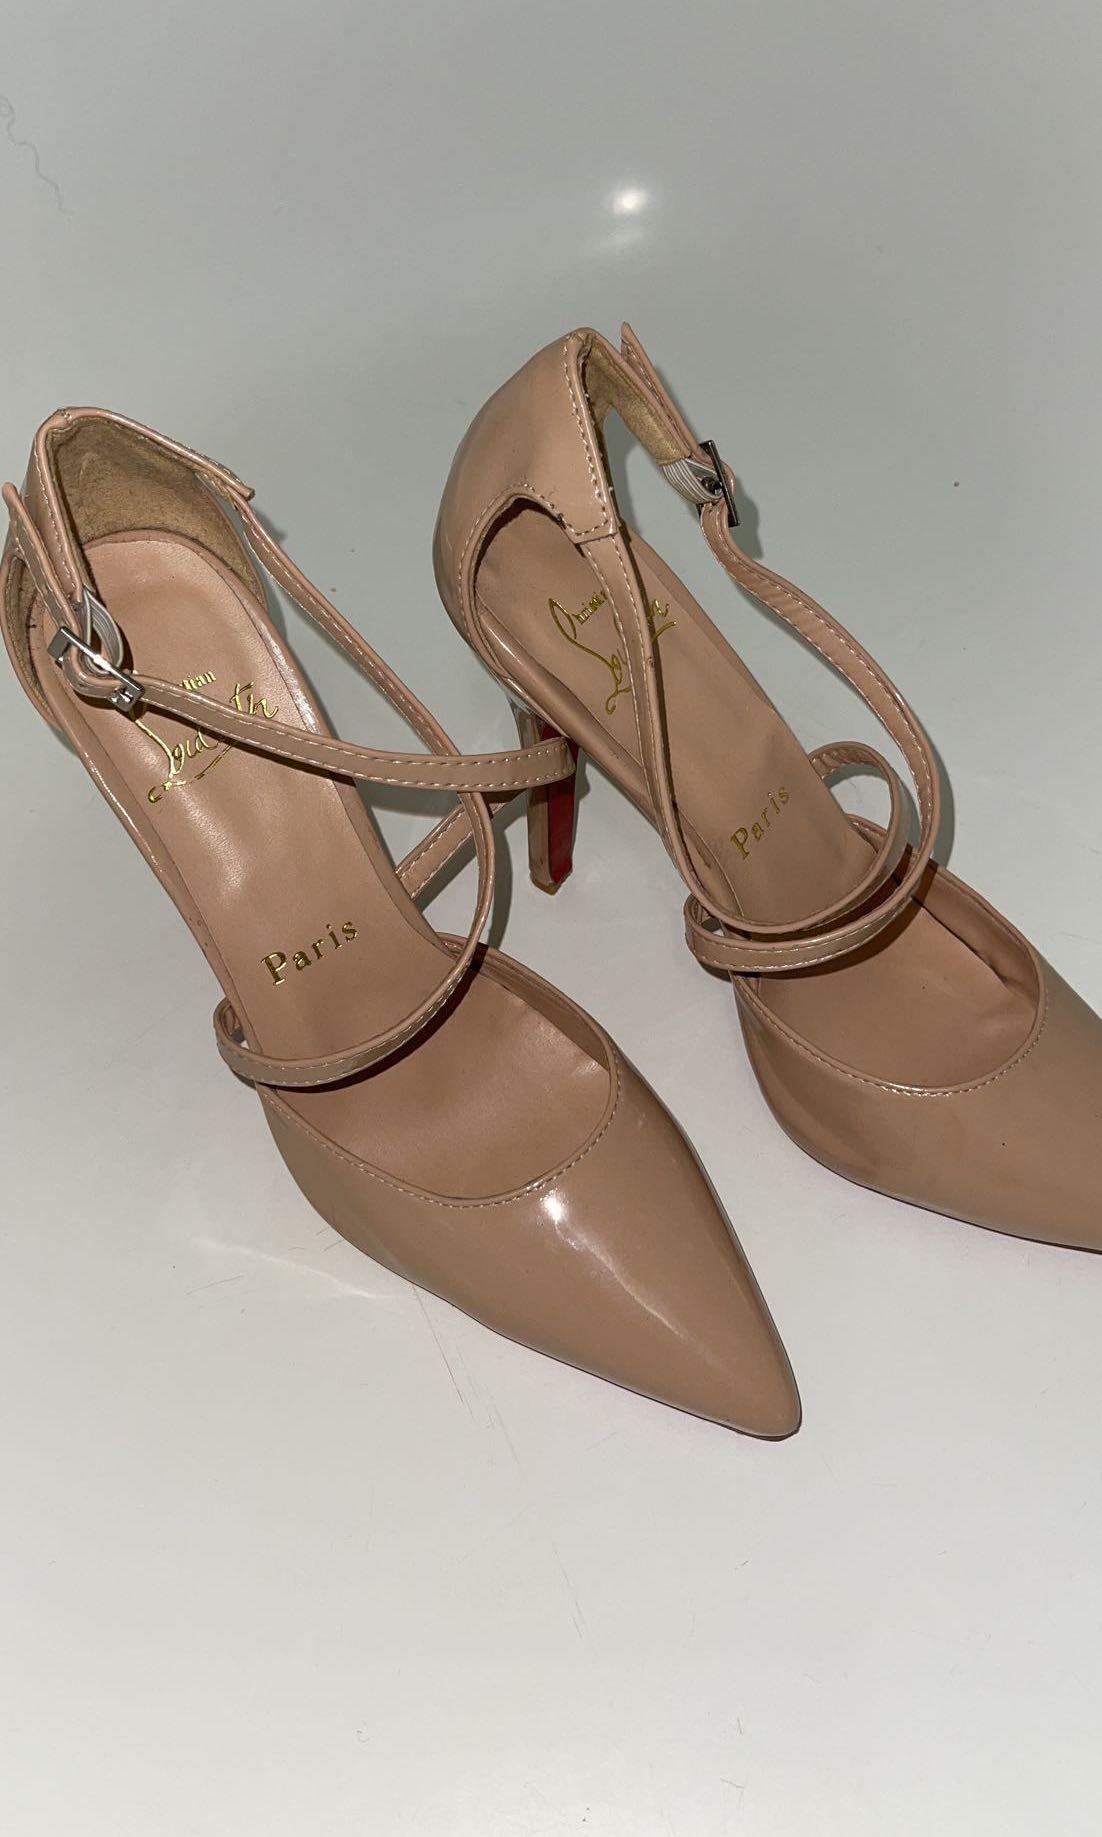 Christian Louboutin (Louis Vuitton) heels with red bottom, Women's